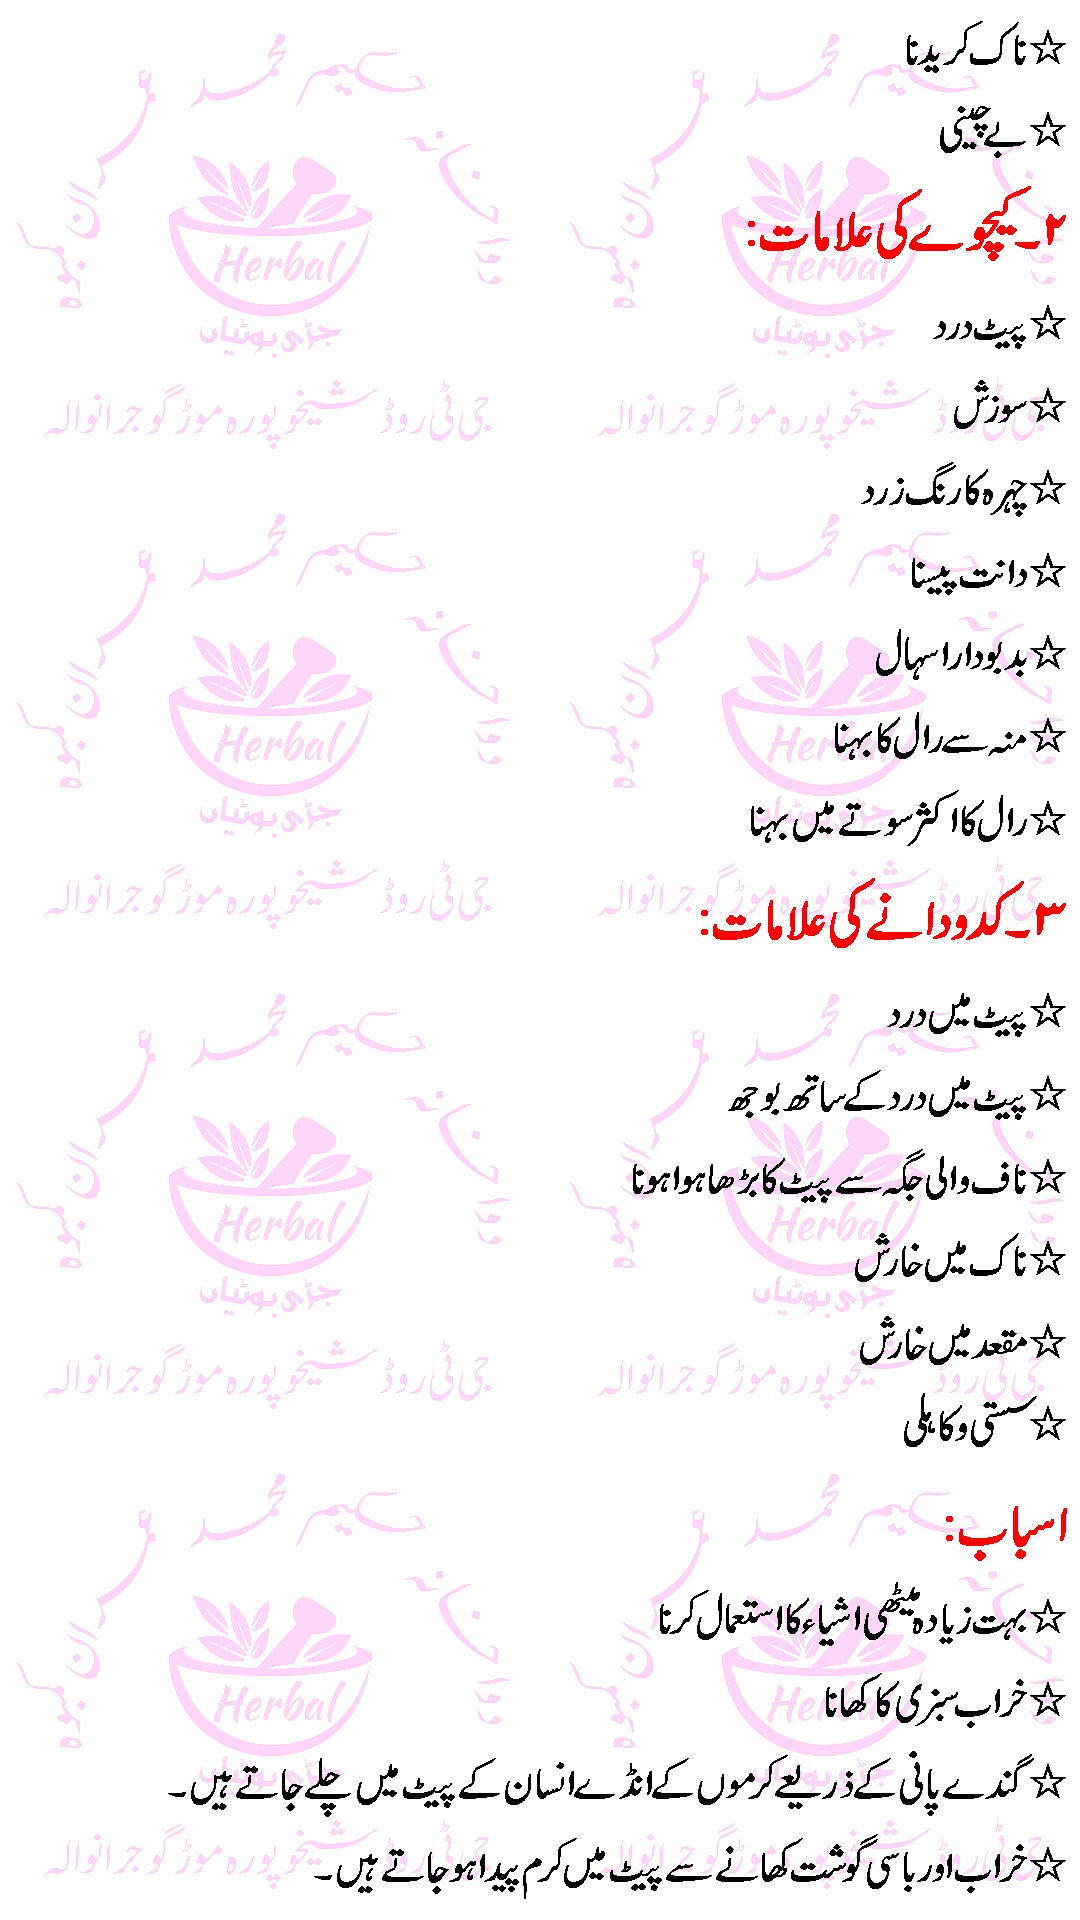 Pait K Keray (Intestinal Worms) Treatment in Urdu 2